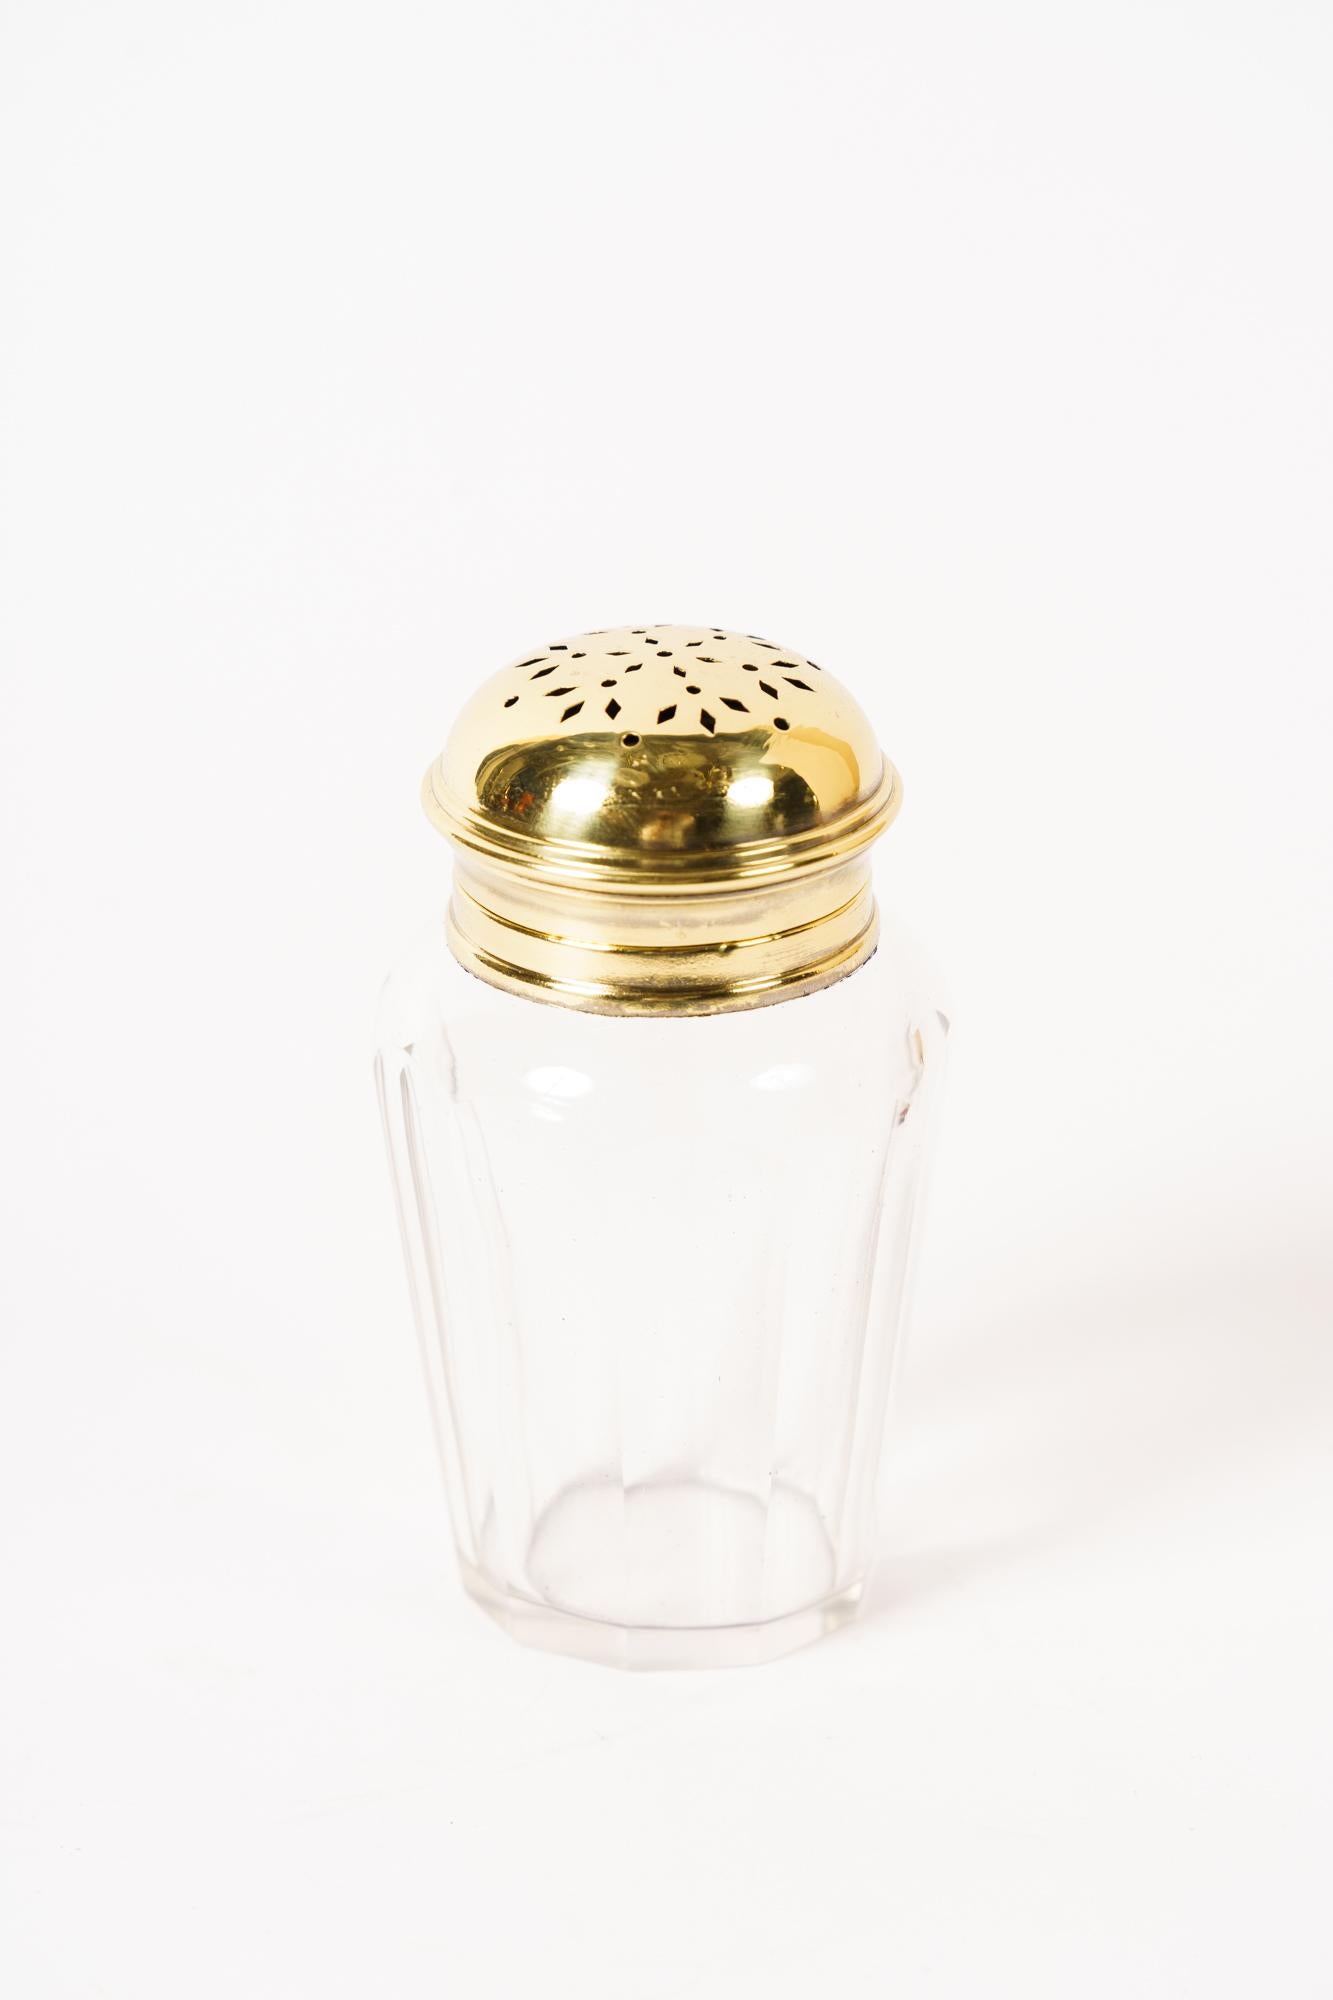 Art Deco sugar shaker vienna around 1920s
Cut Glass
Brass Polished.